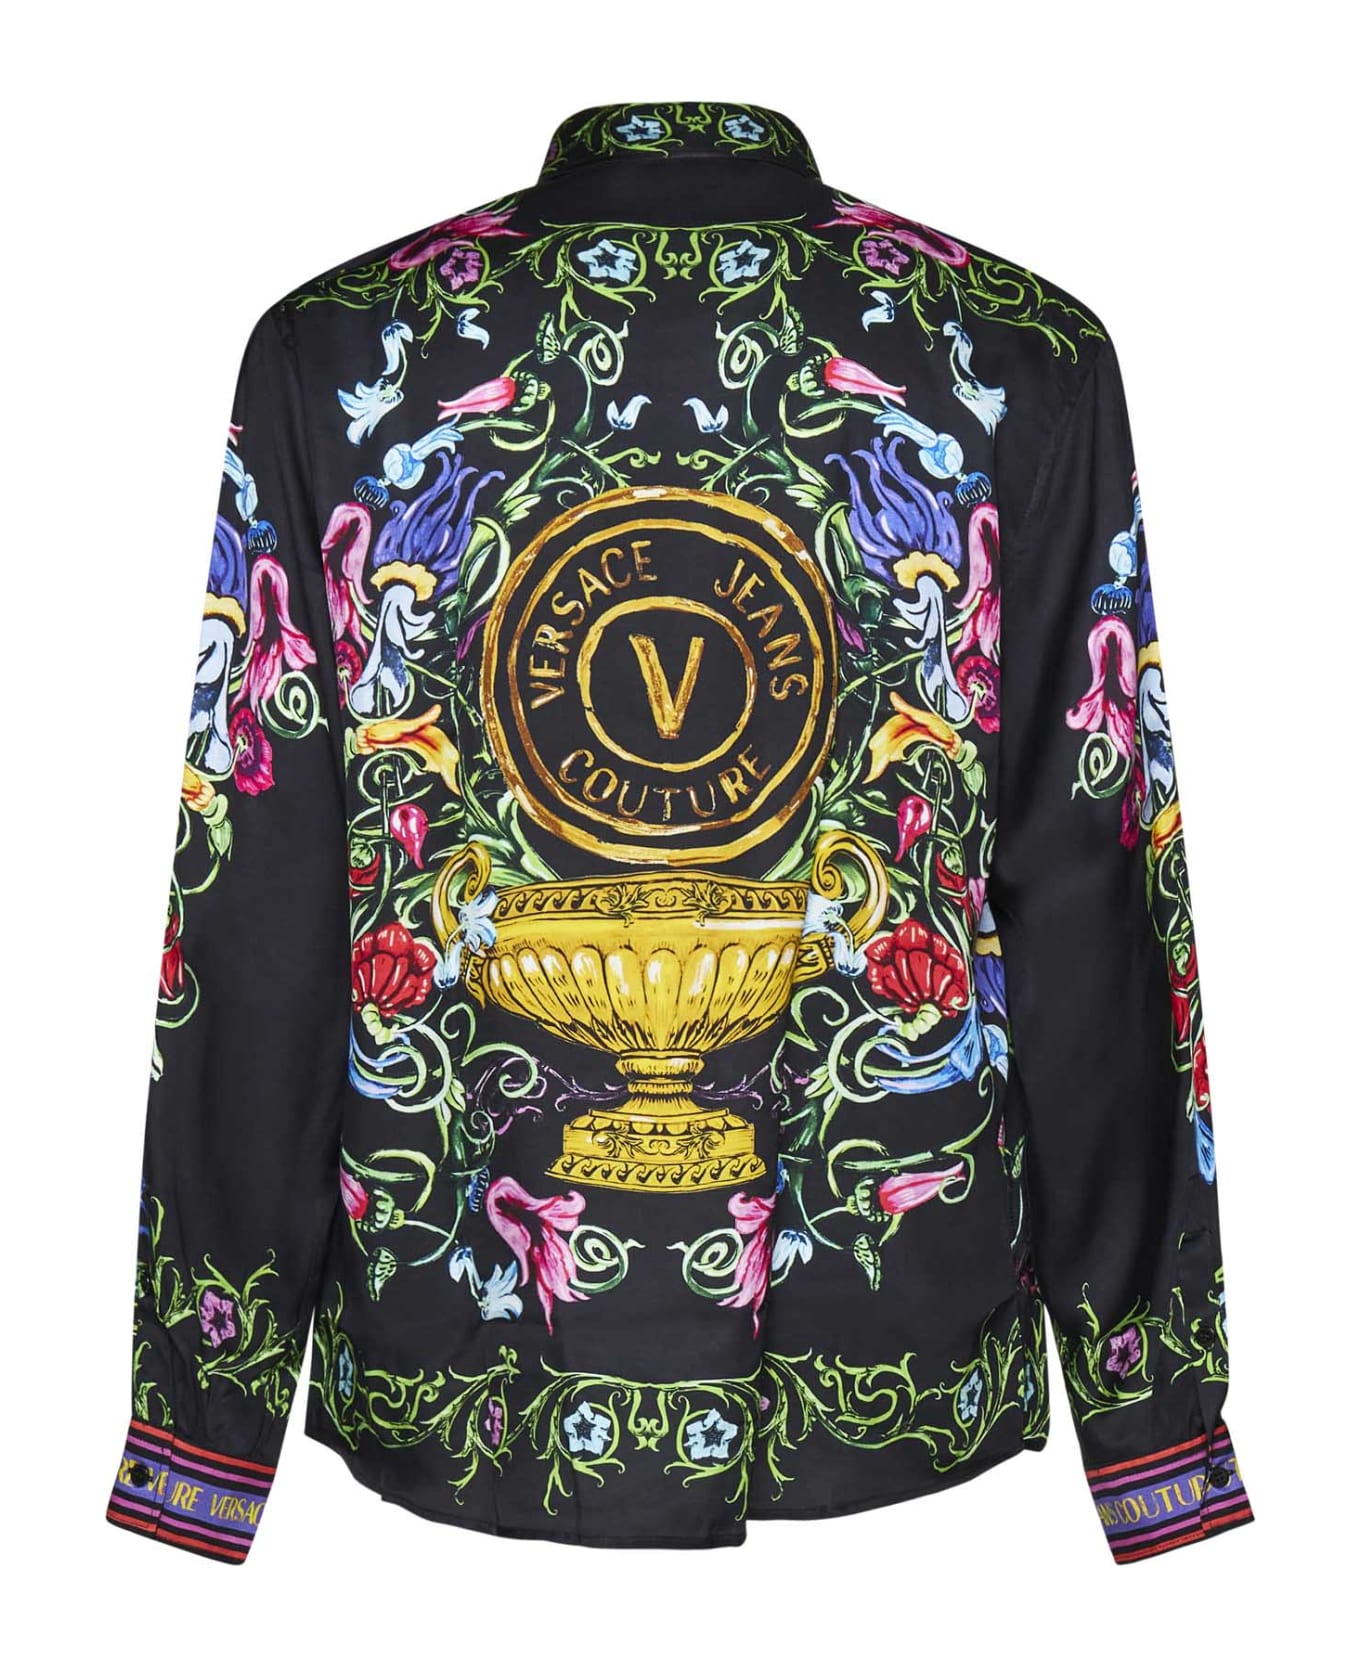 Versace Jeans Couture Shirt - Black